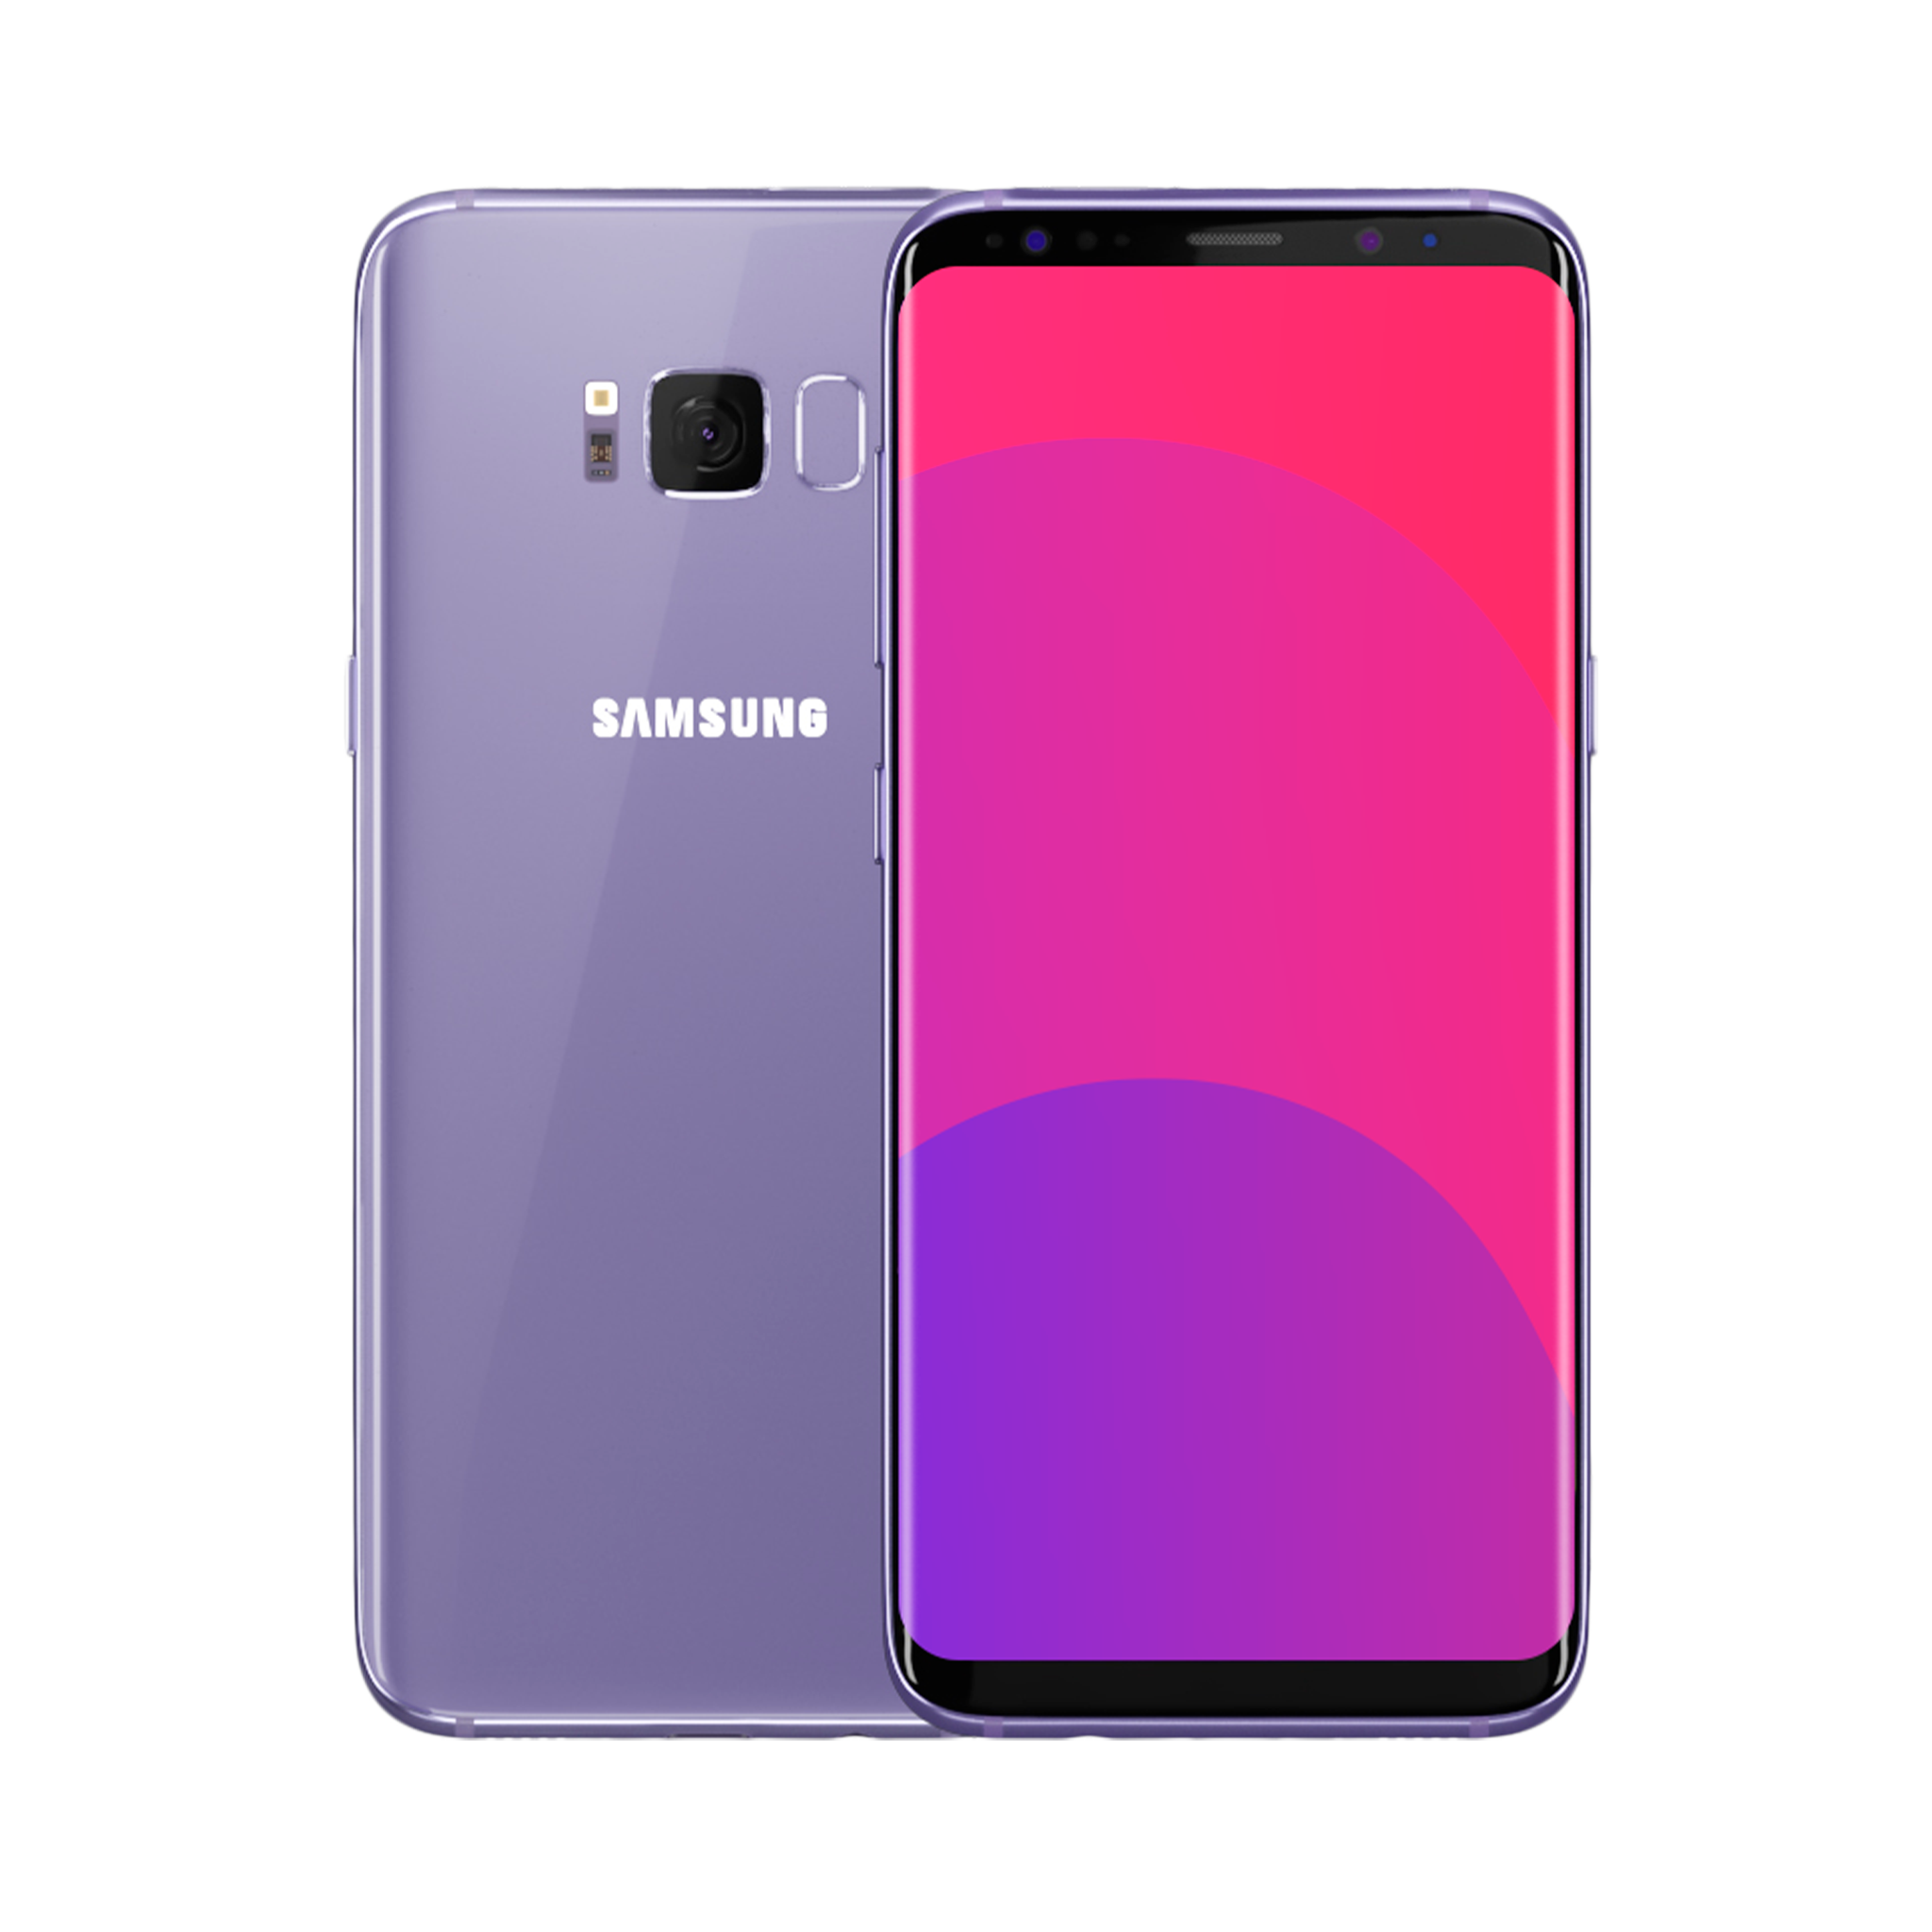 Samsung Galaxy S8 64GB Violet